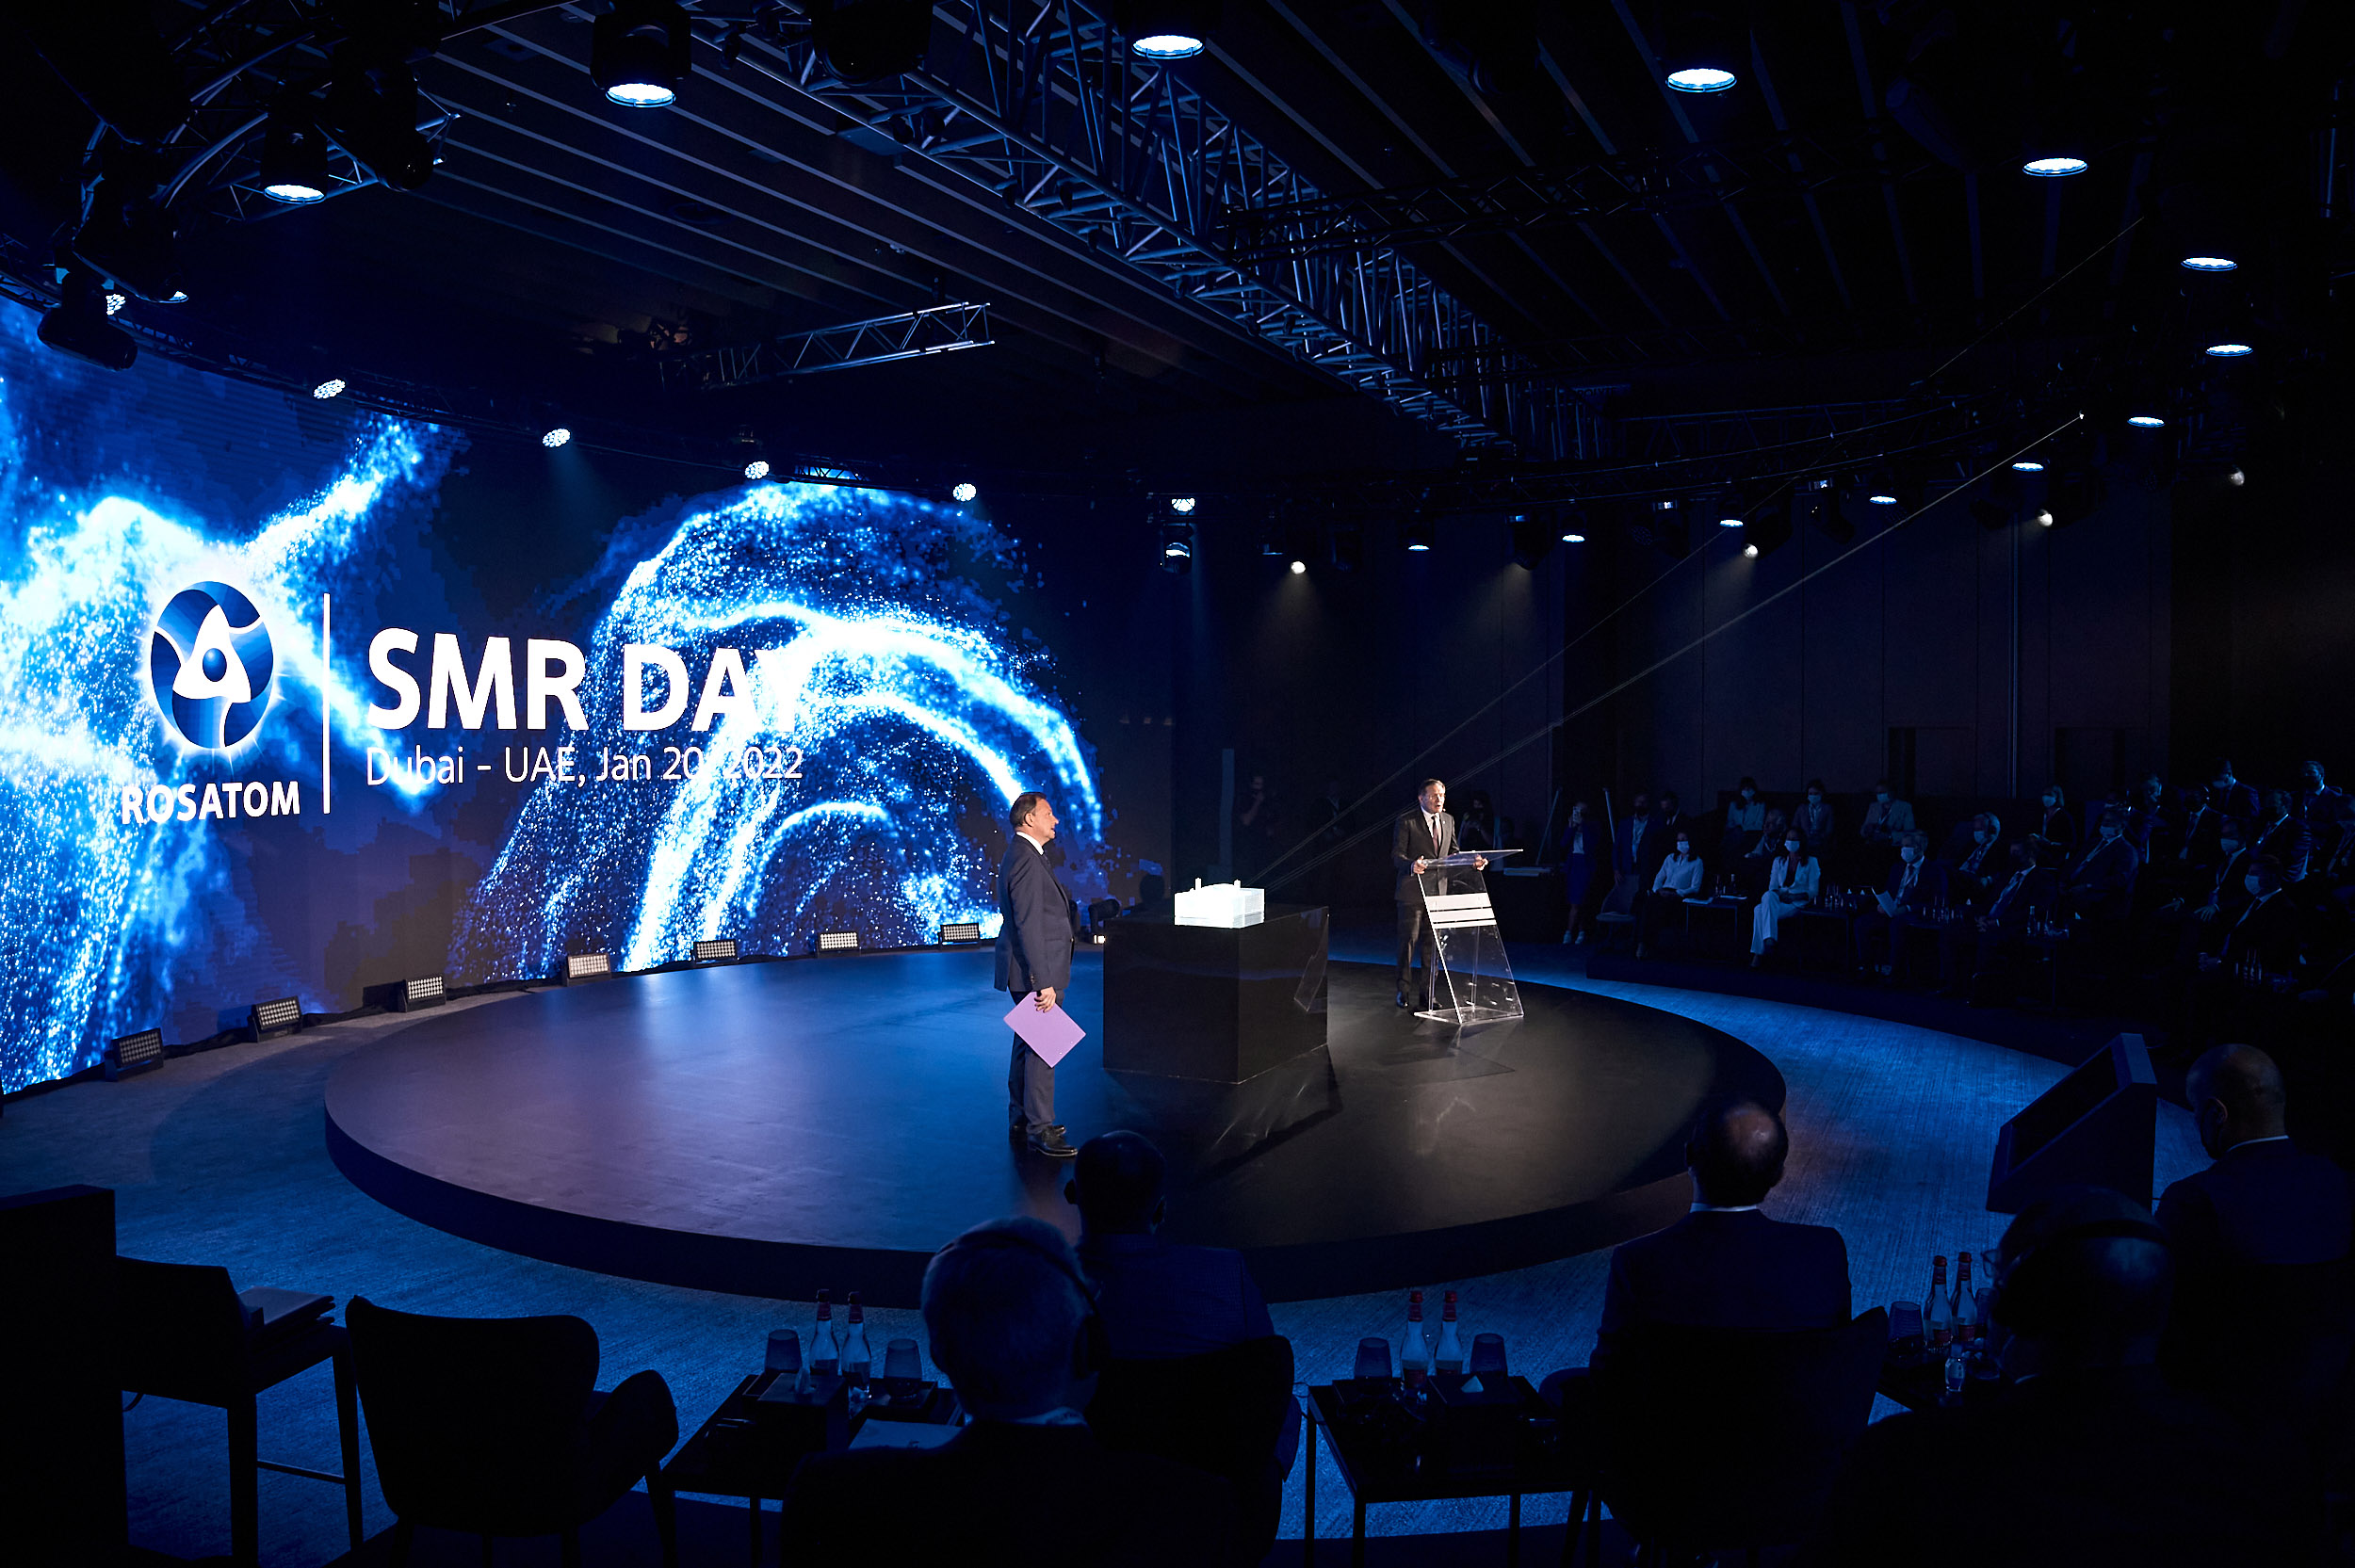 Rosatom presents its SMR technology at EXPO 2020